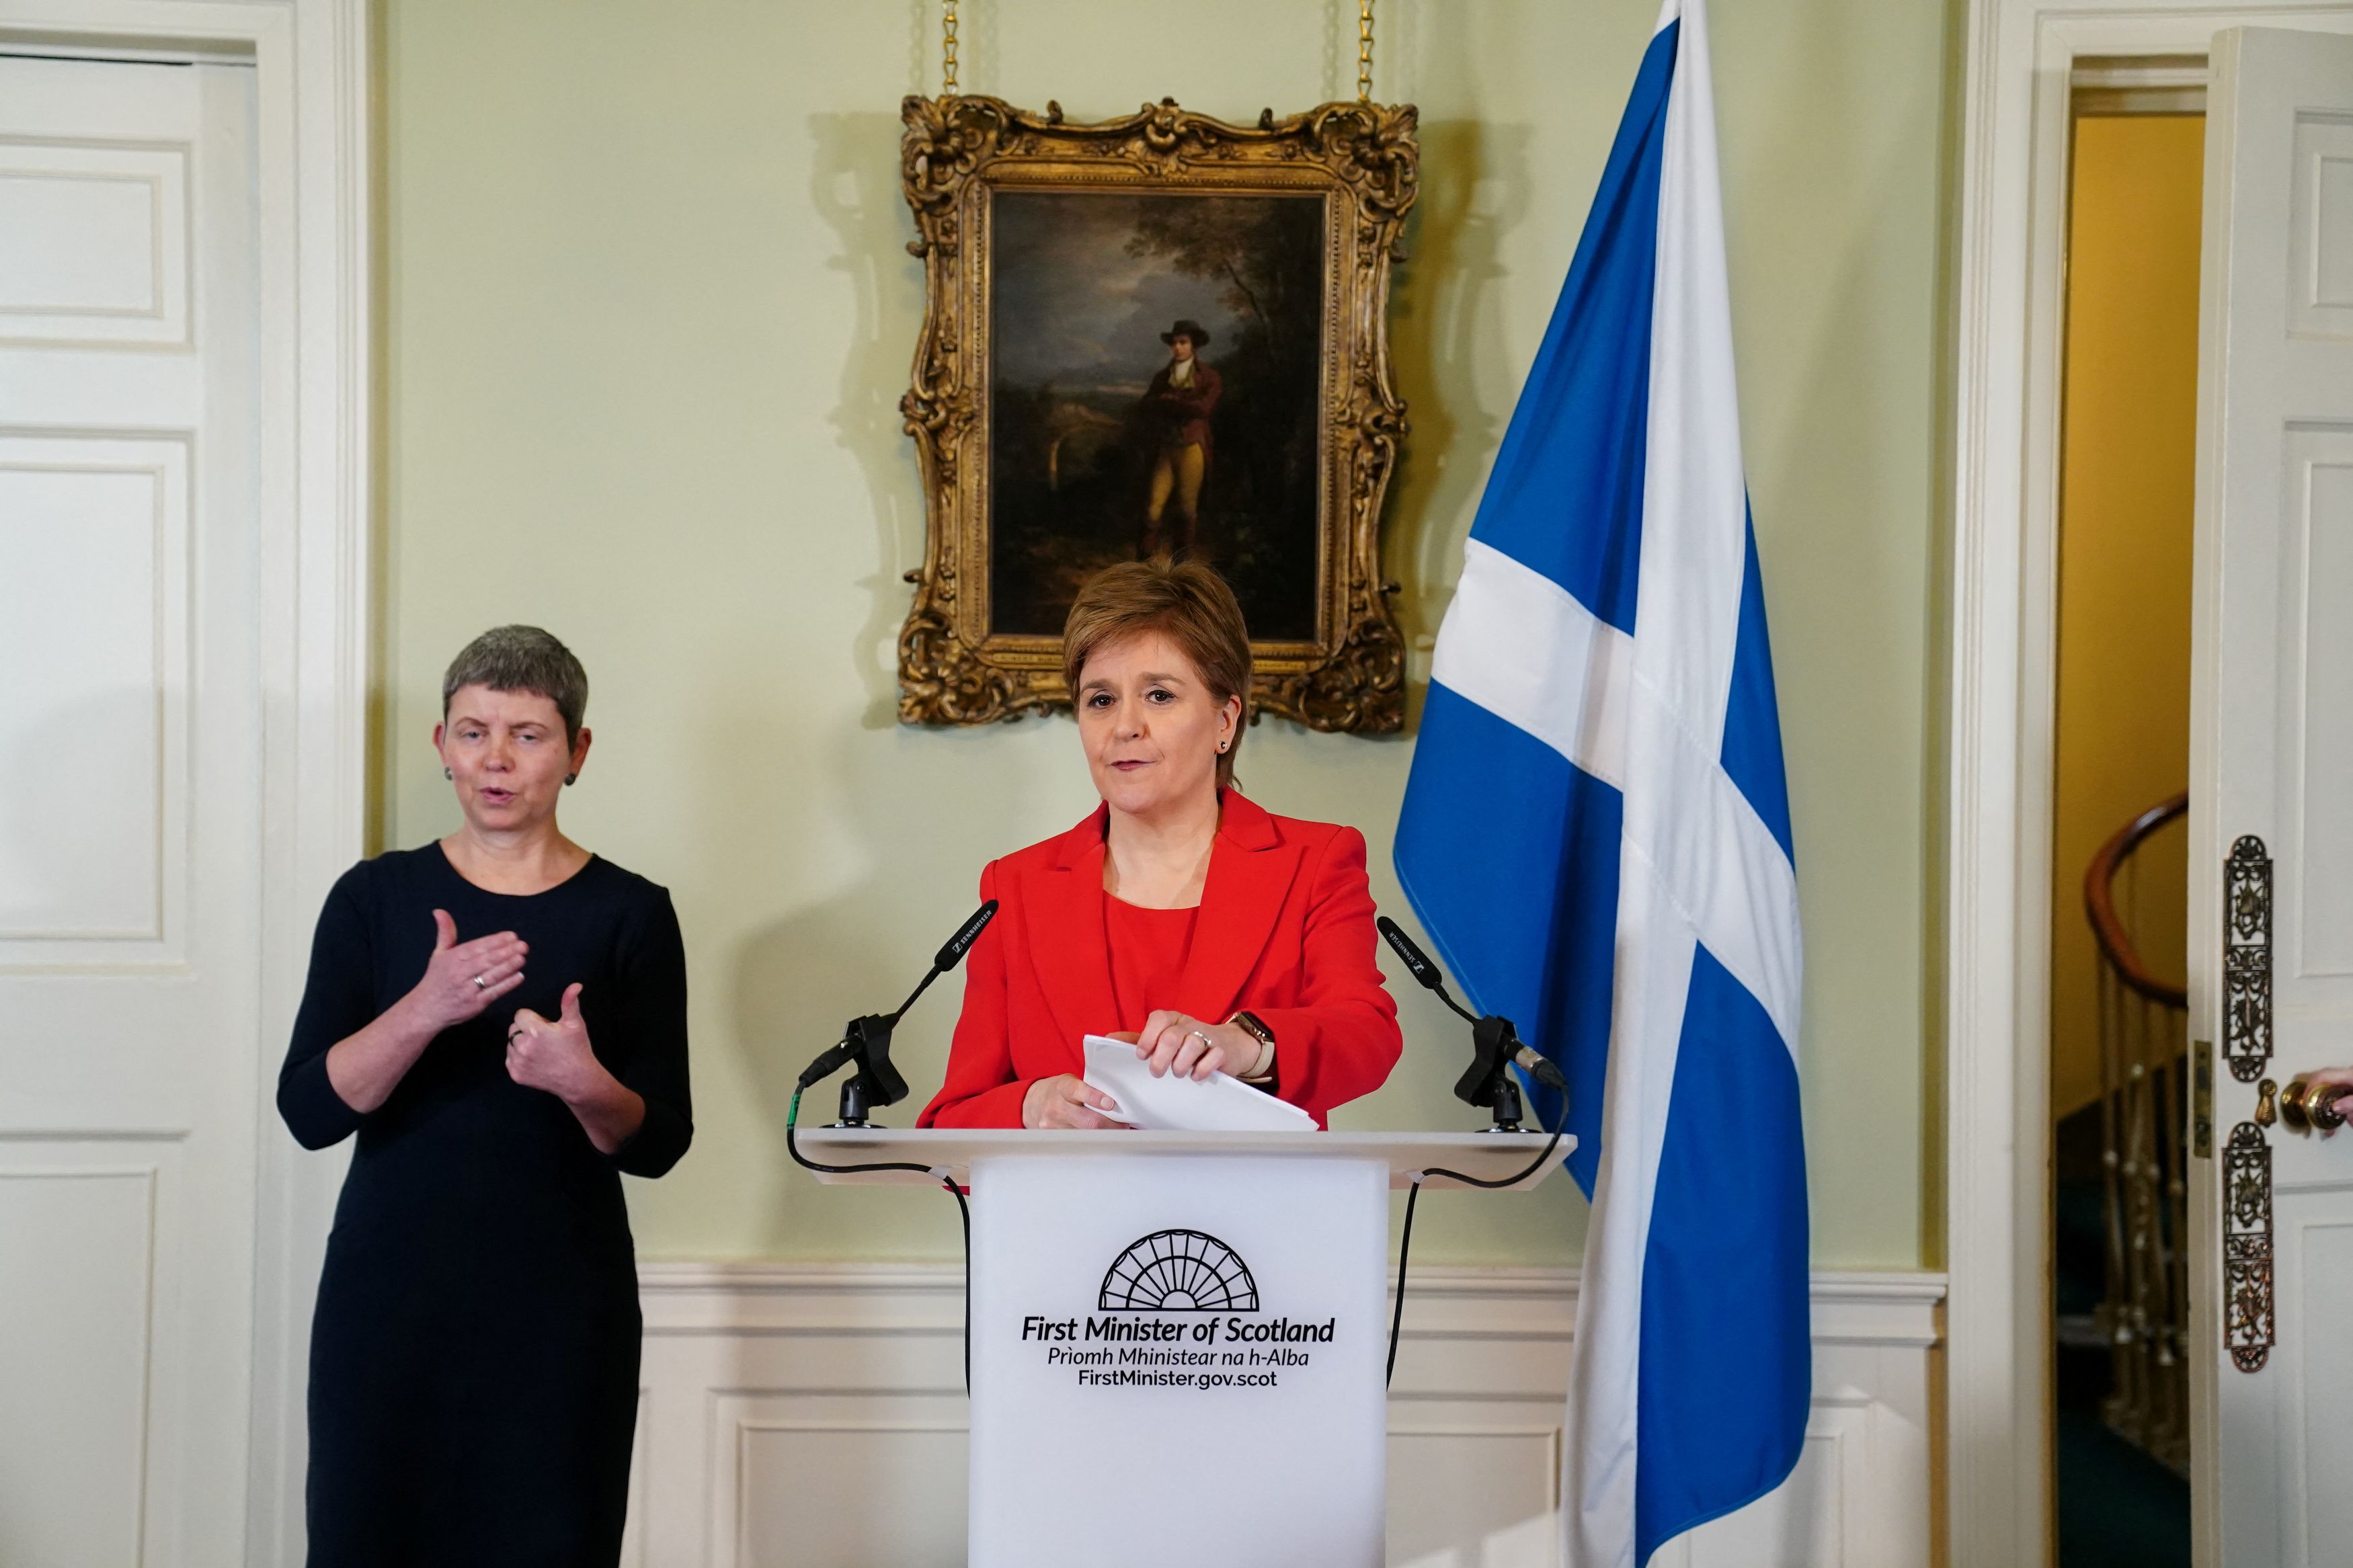 Nicola Sturgeon addresses a press conference at Bute House in Edinburgh, Scotland, February 15, 2023. /Reuters